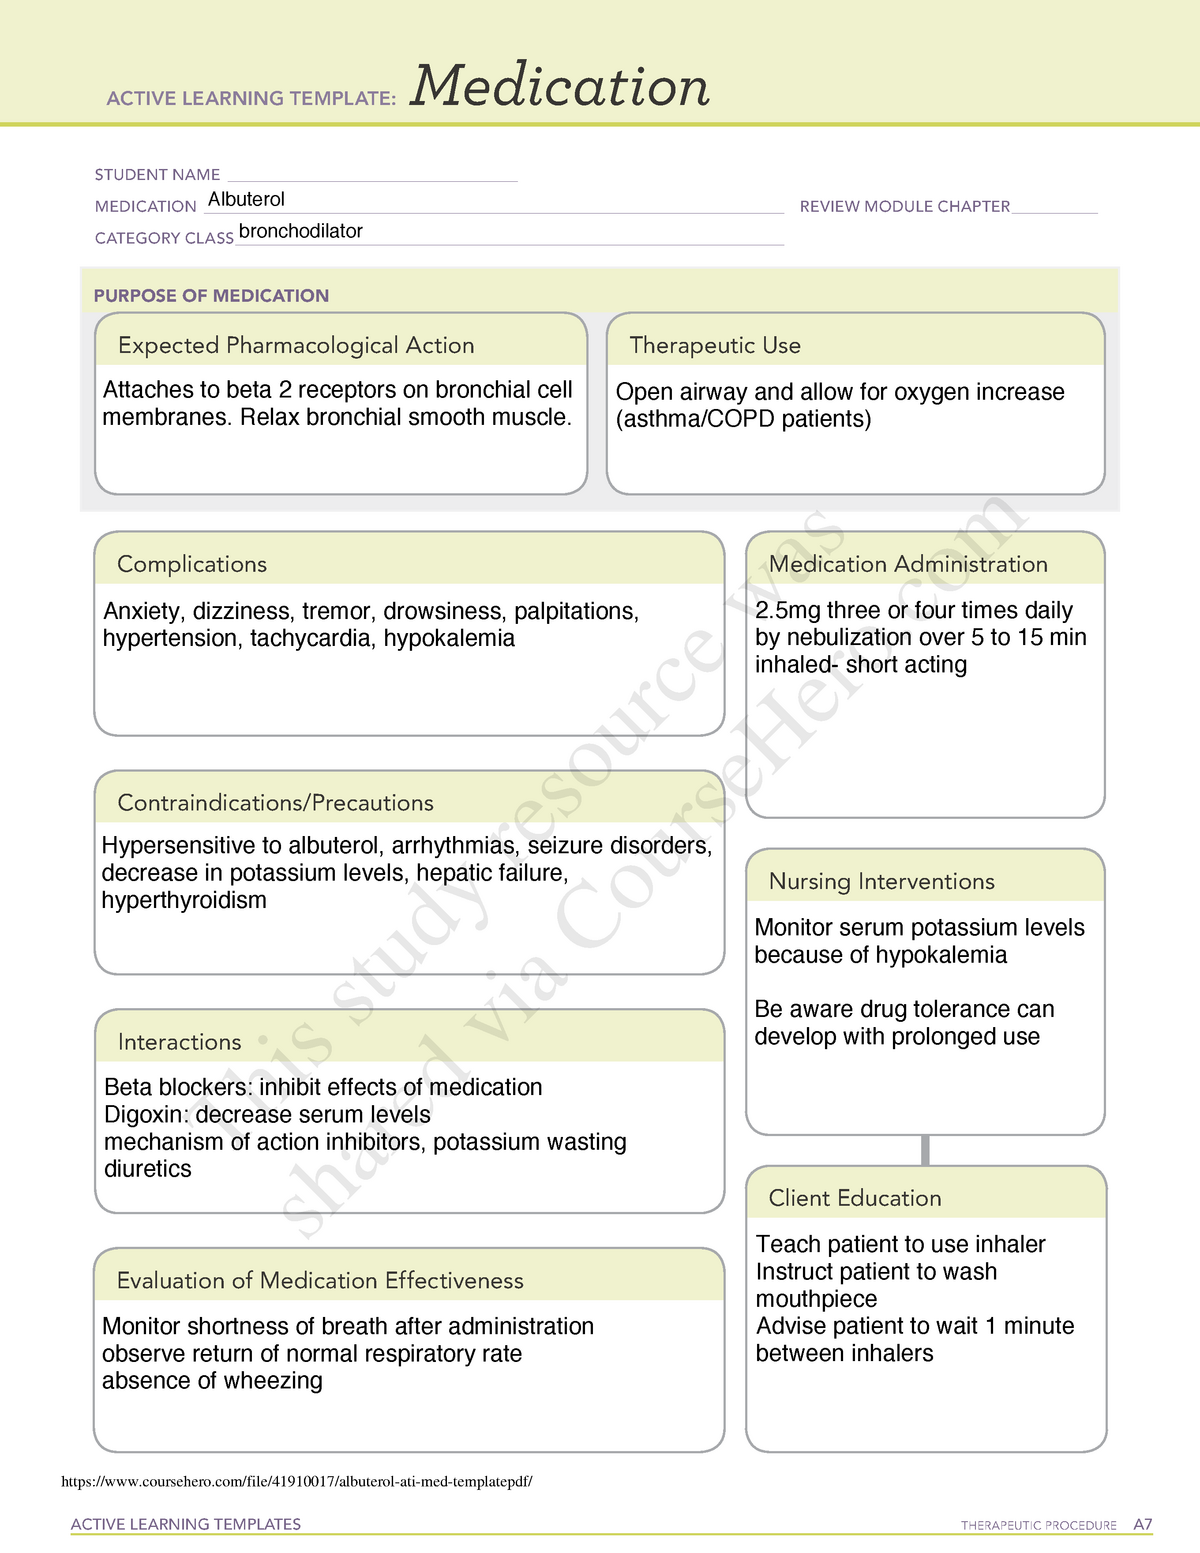 albuterol-ati-med-template-pdf-active-learning-templates-therapeutic